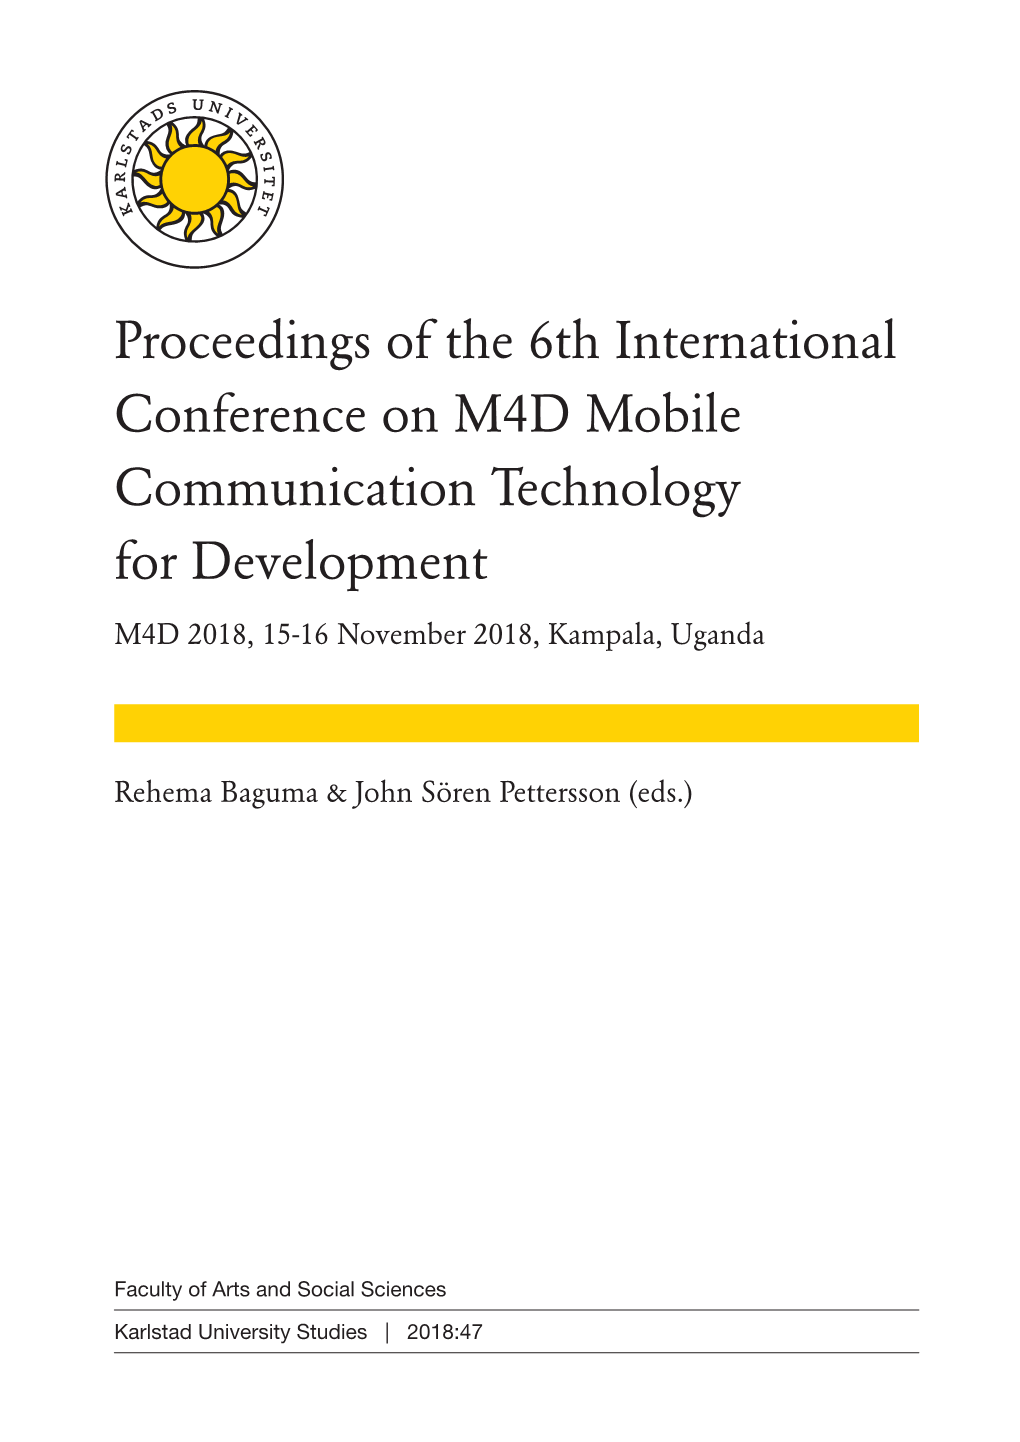 Proceedings of the 6Th International Conference on M4D Mobile Communication Technology for Development M4D 2018, 15-16 November 2018, Kampala, Uganda